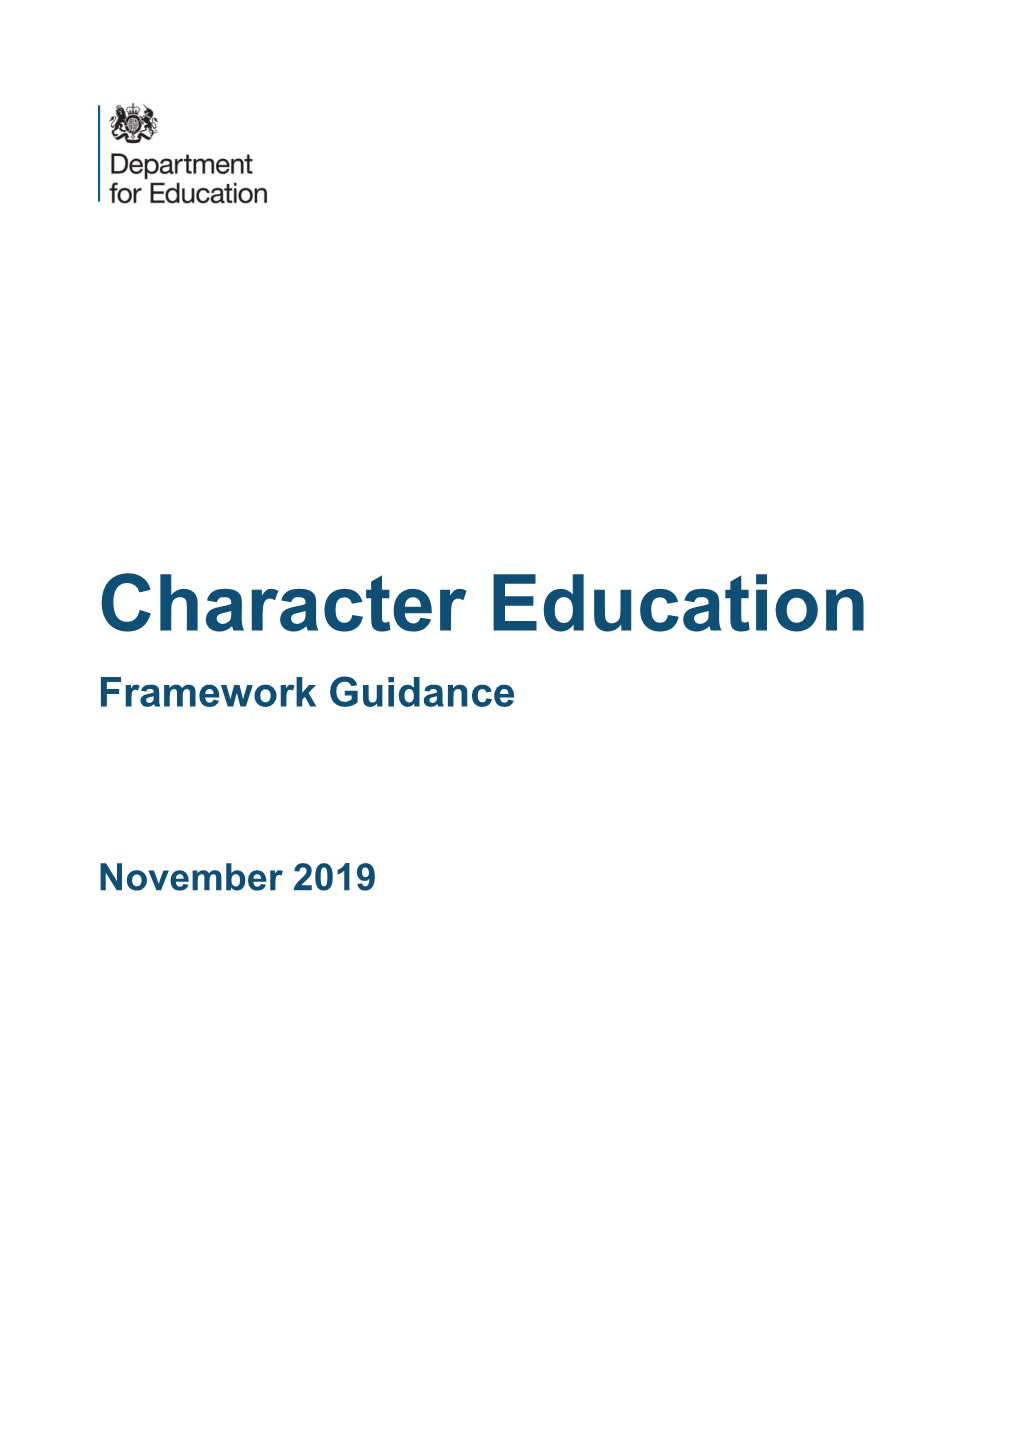 Character Education Framework Guidance